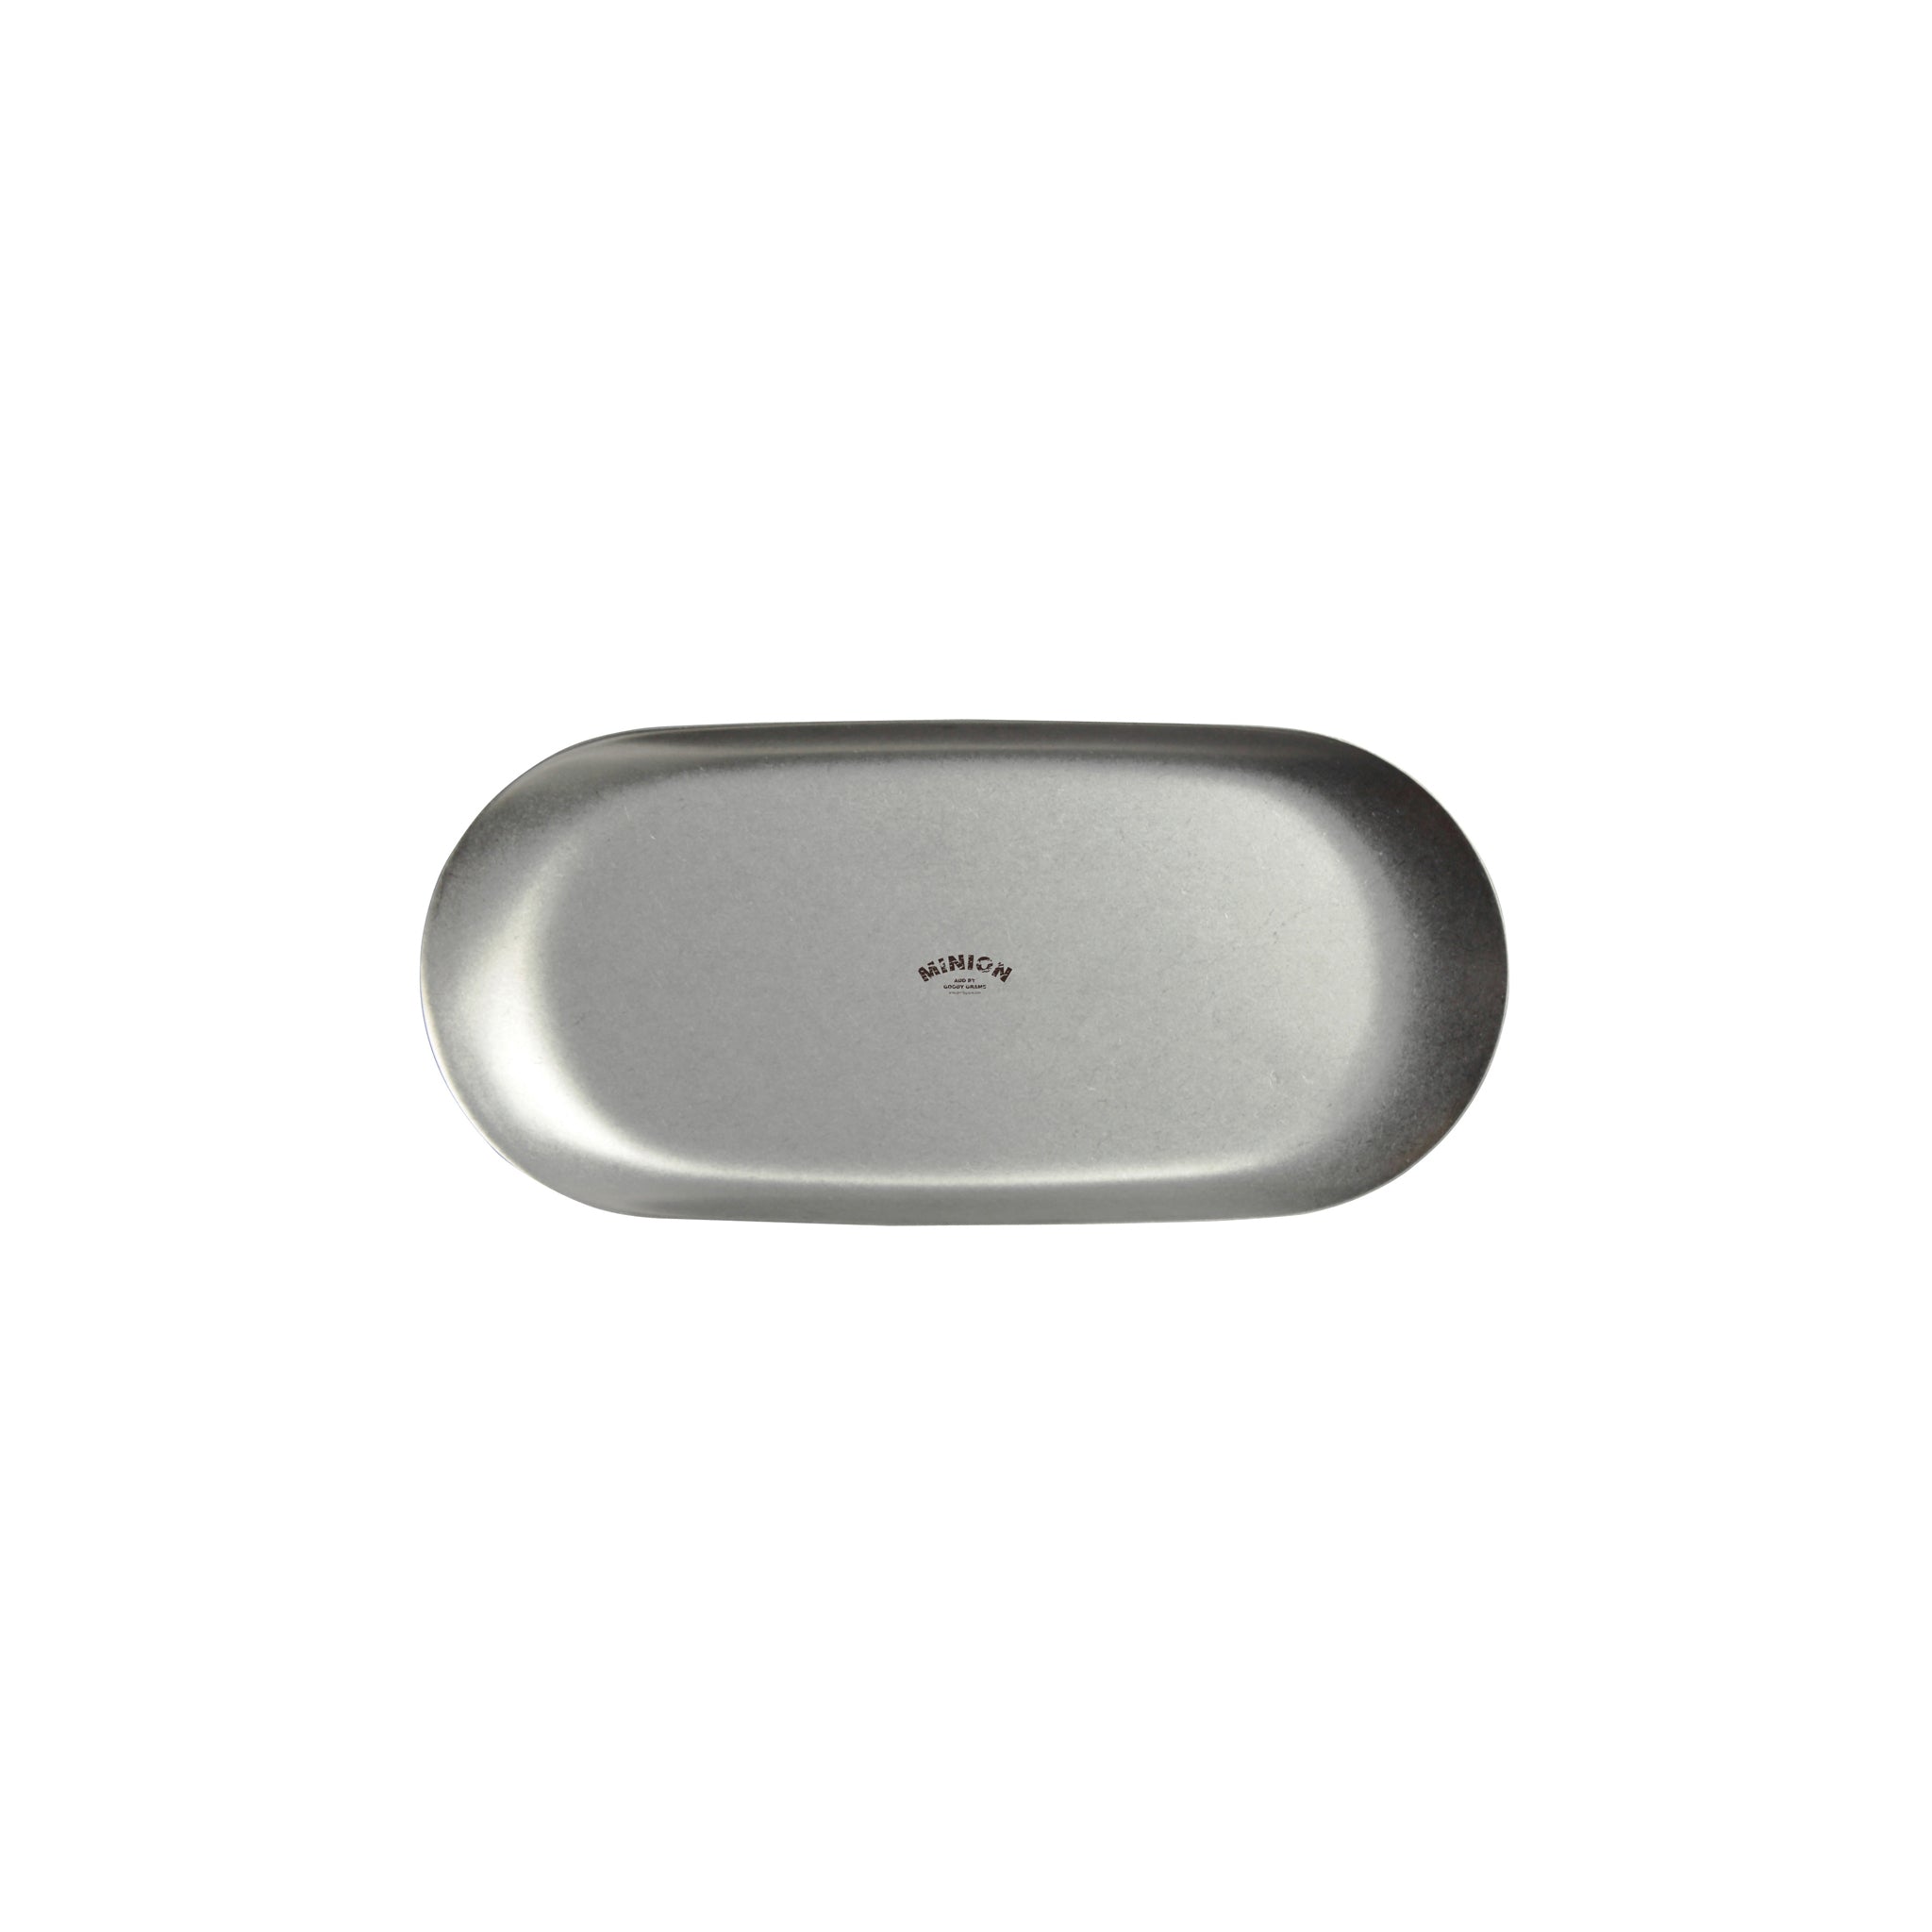 Minion - Oval Display Tray